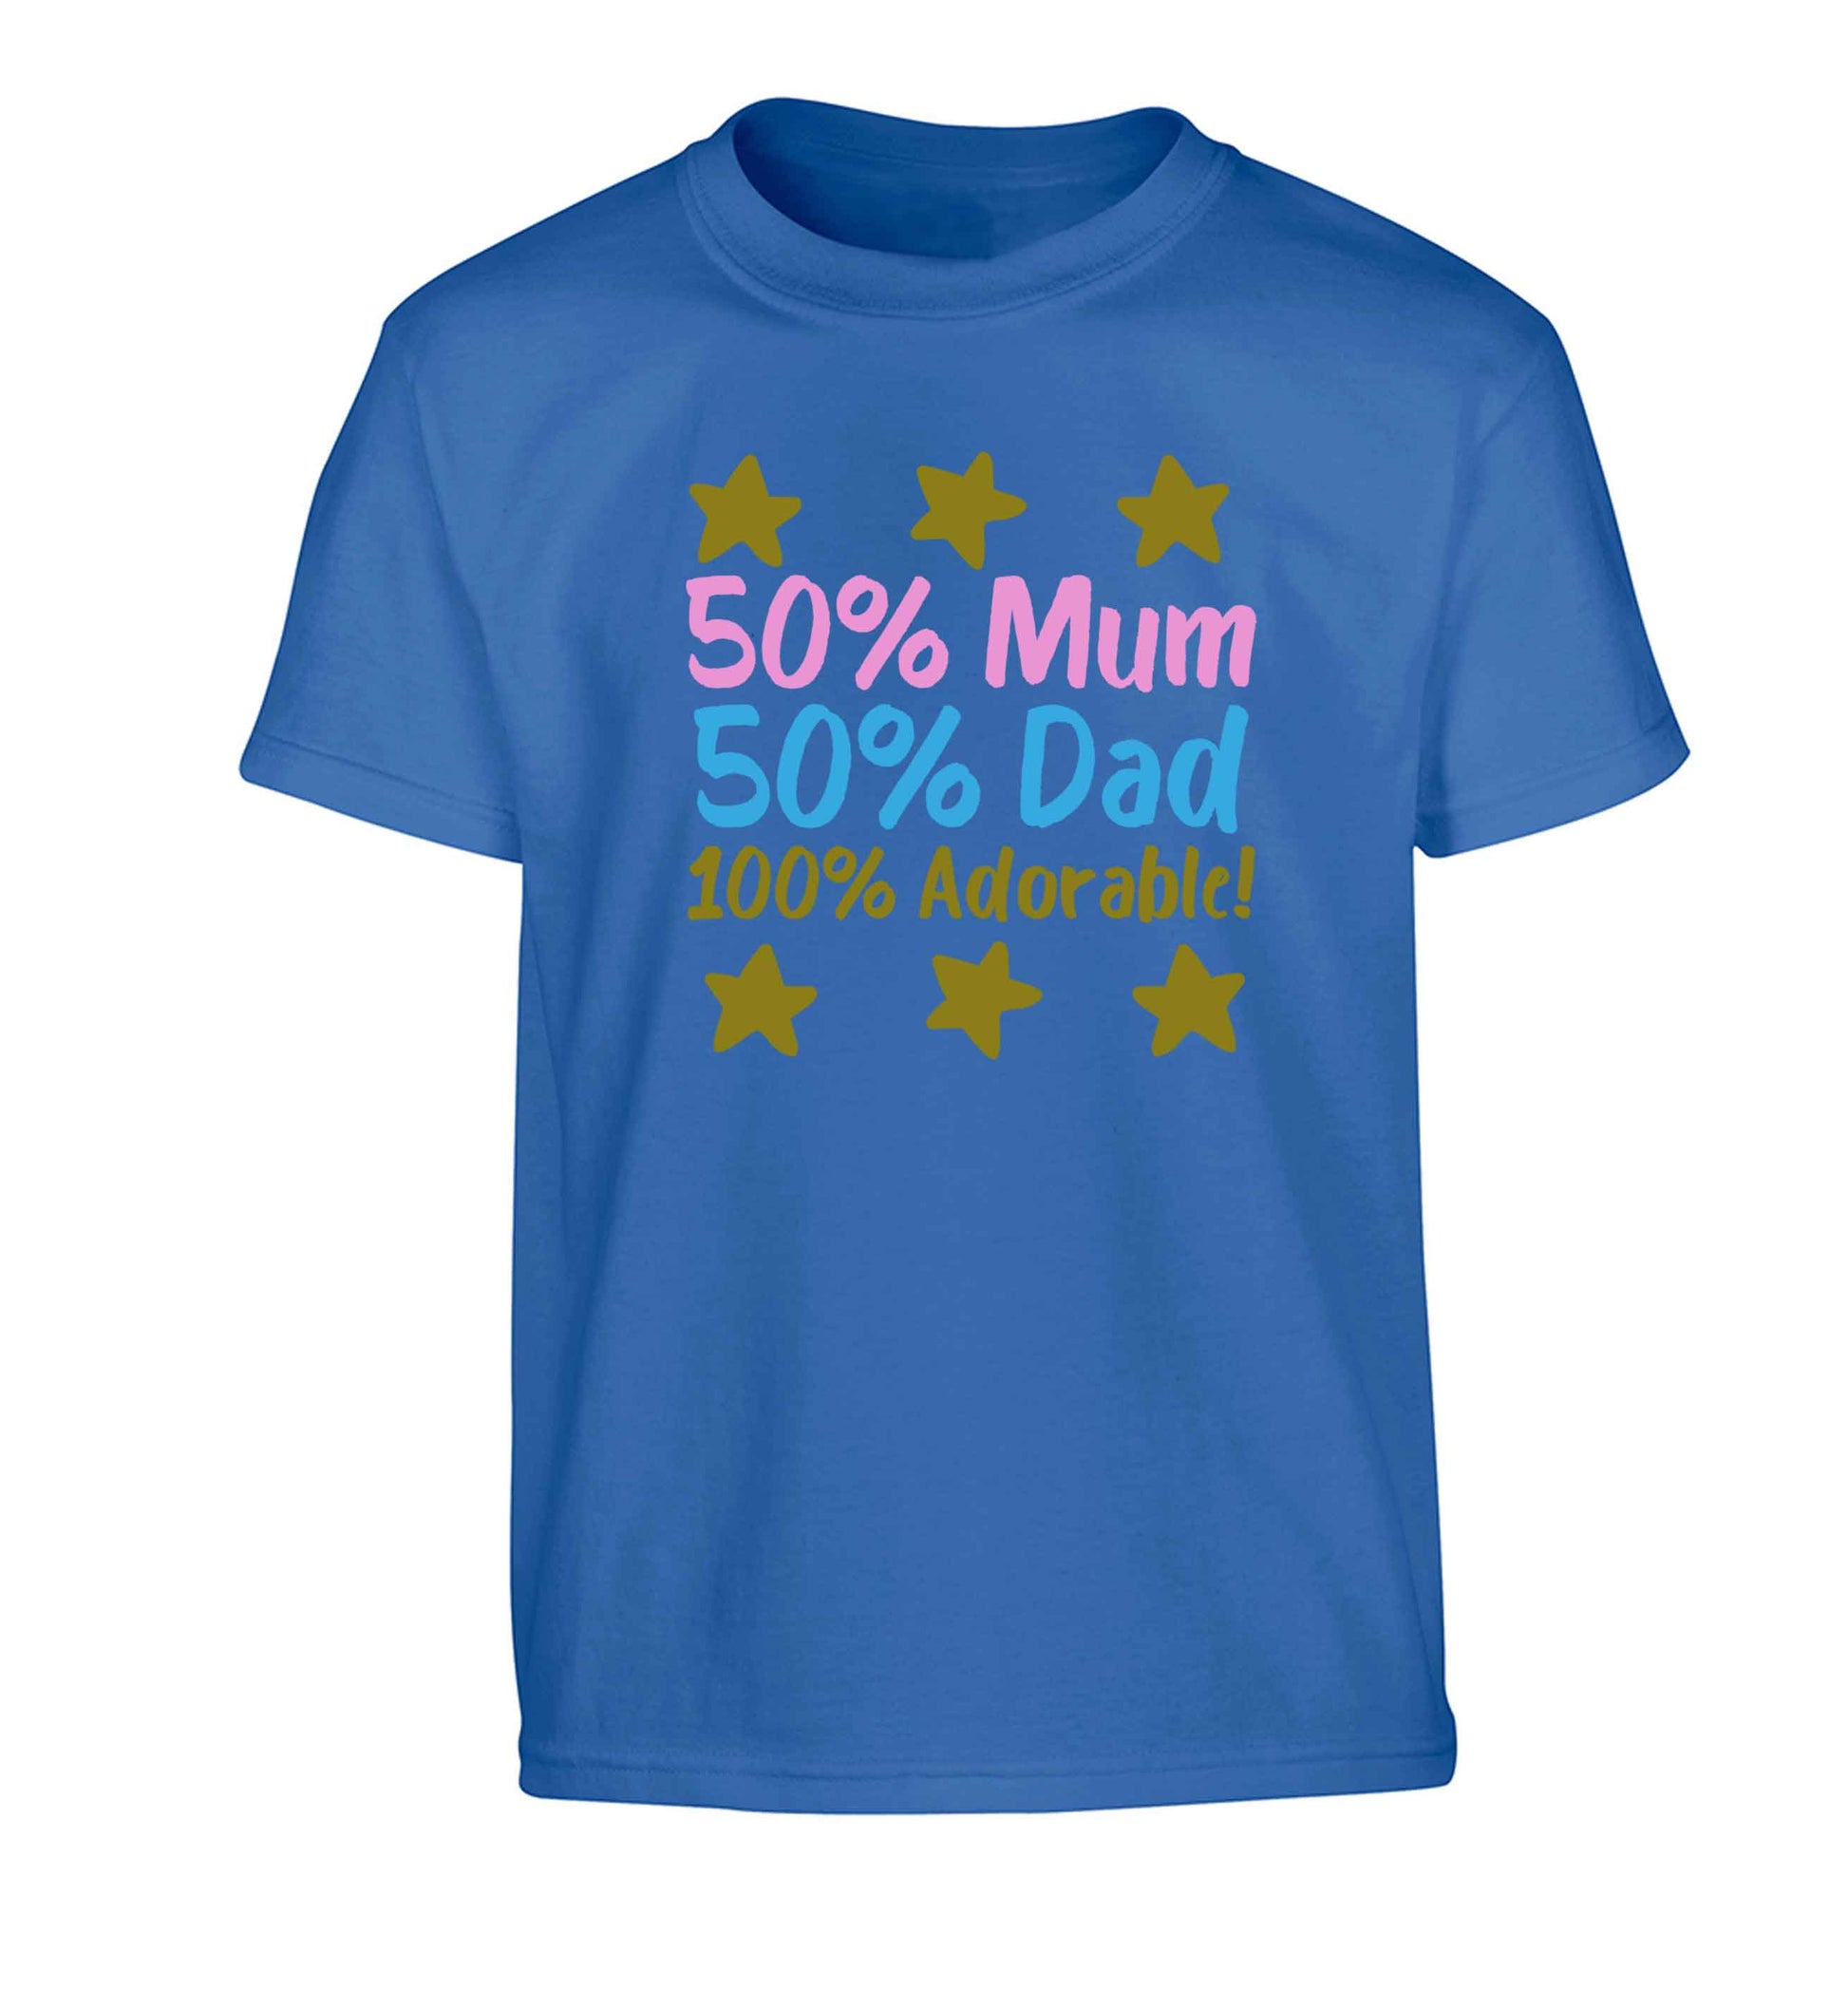 50% mum 50% dad 100% adorable Children's blue Tshirt 12-13 Years